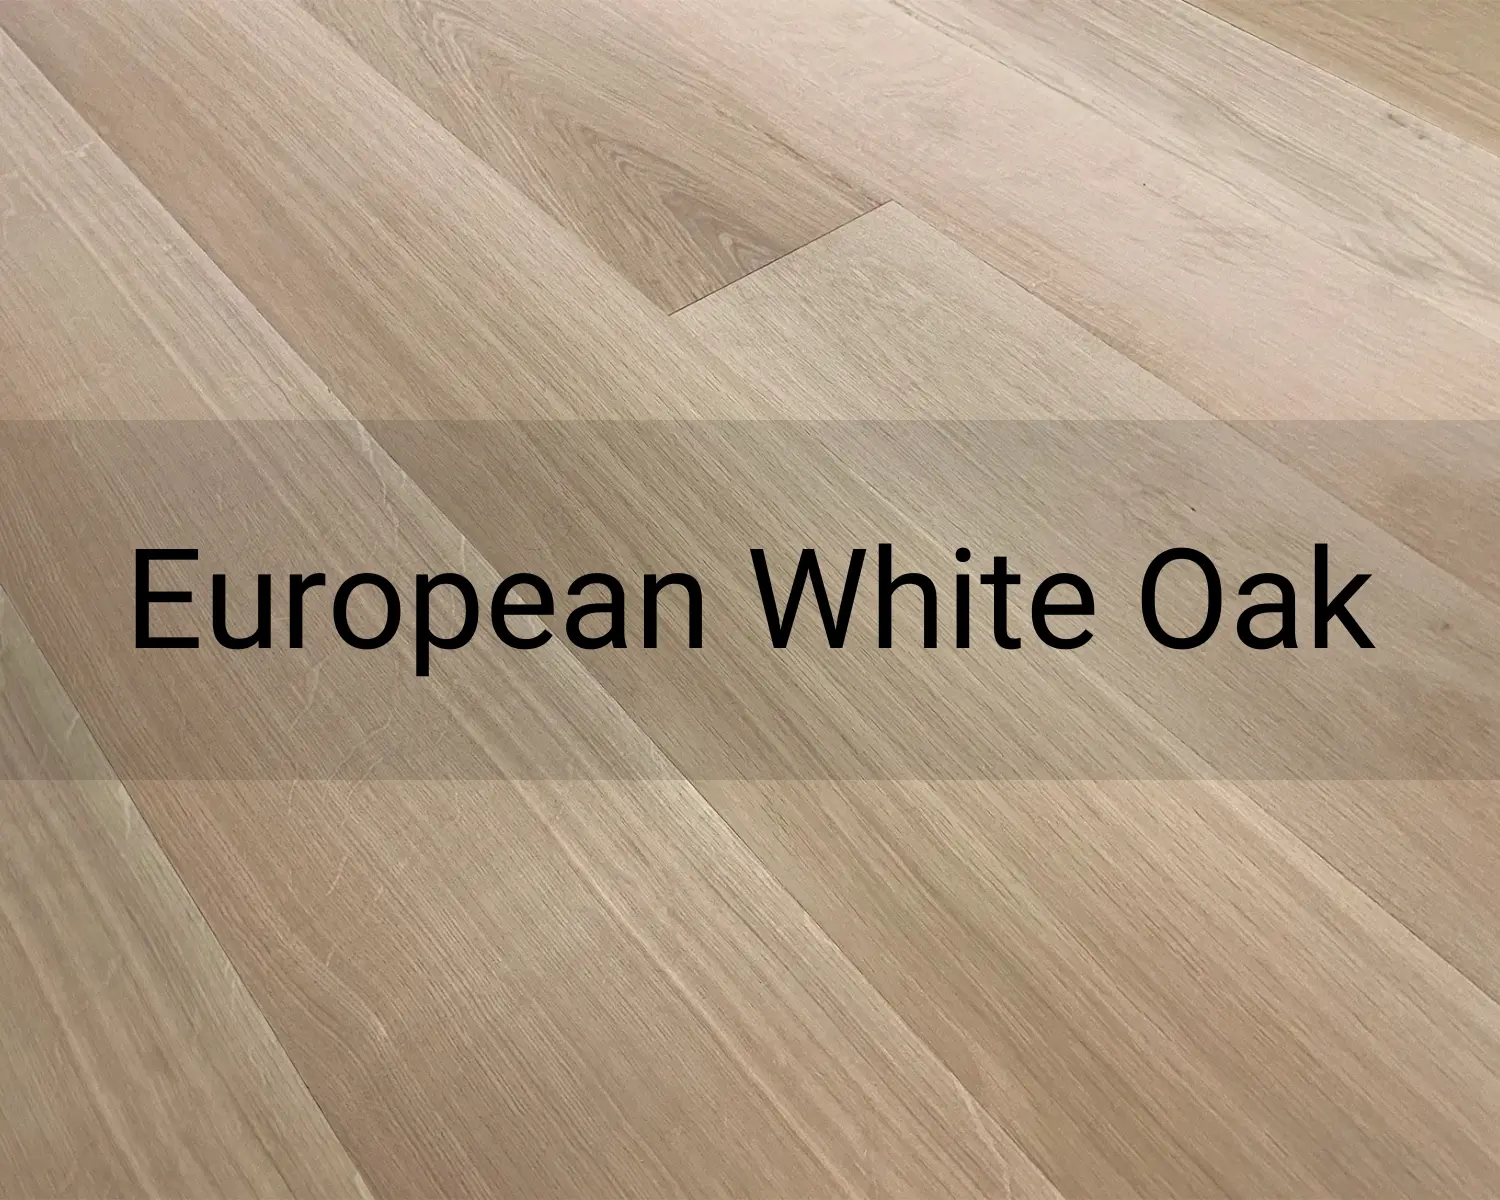 EUROPEAN WHITE OAK